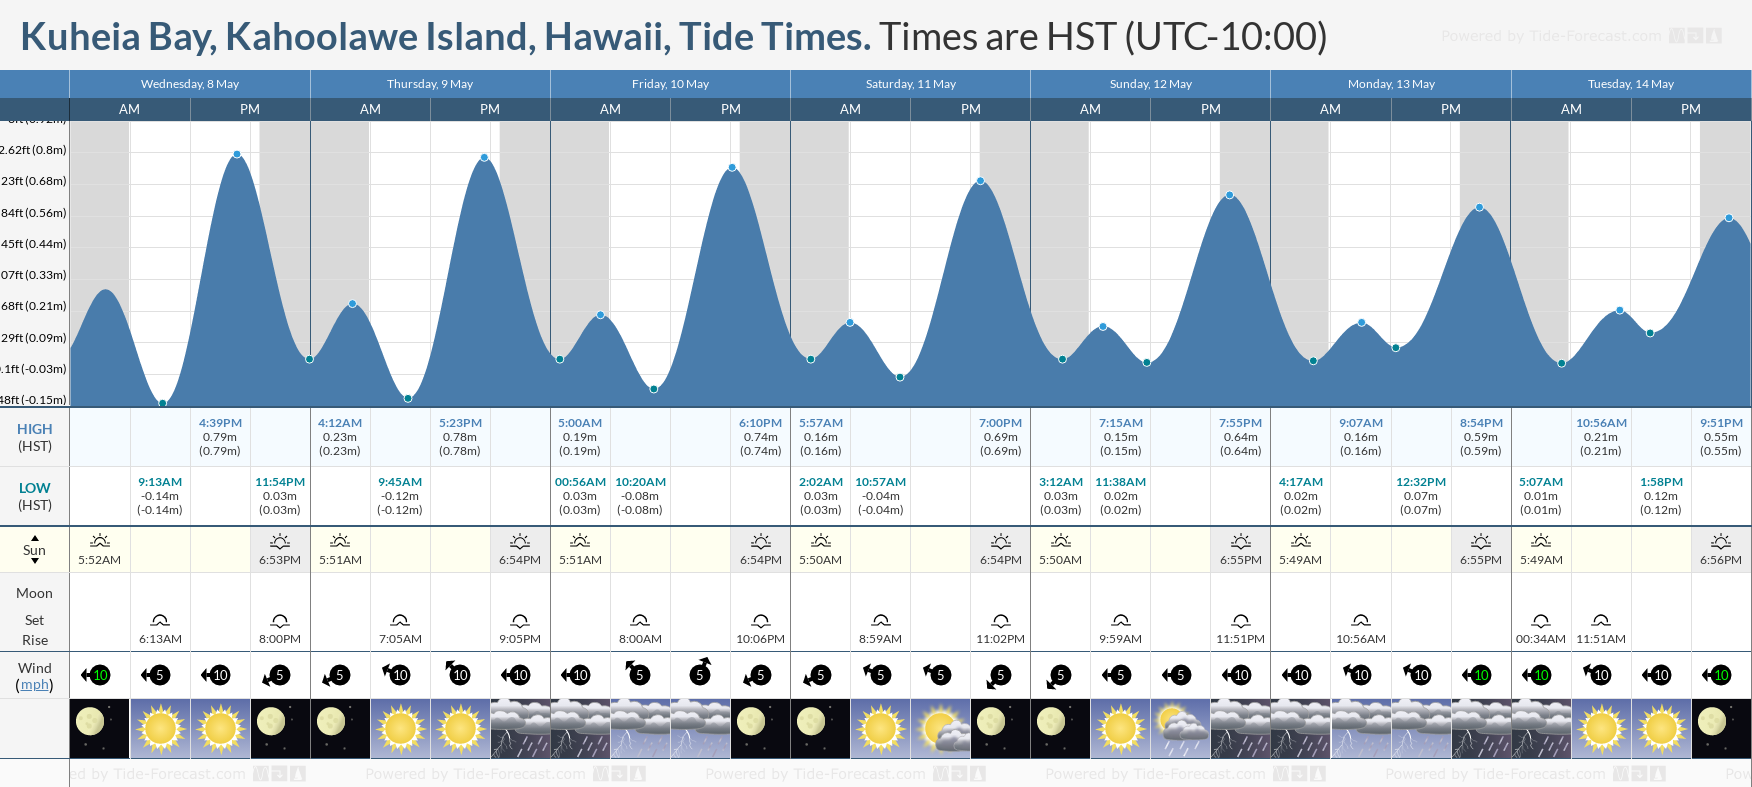 Kuheia Bay, Kahoolawe Island, Hawaii Tide Chart including high and low tide times for the next 7 days